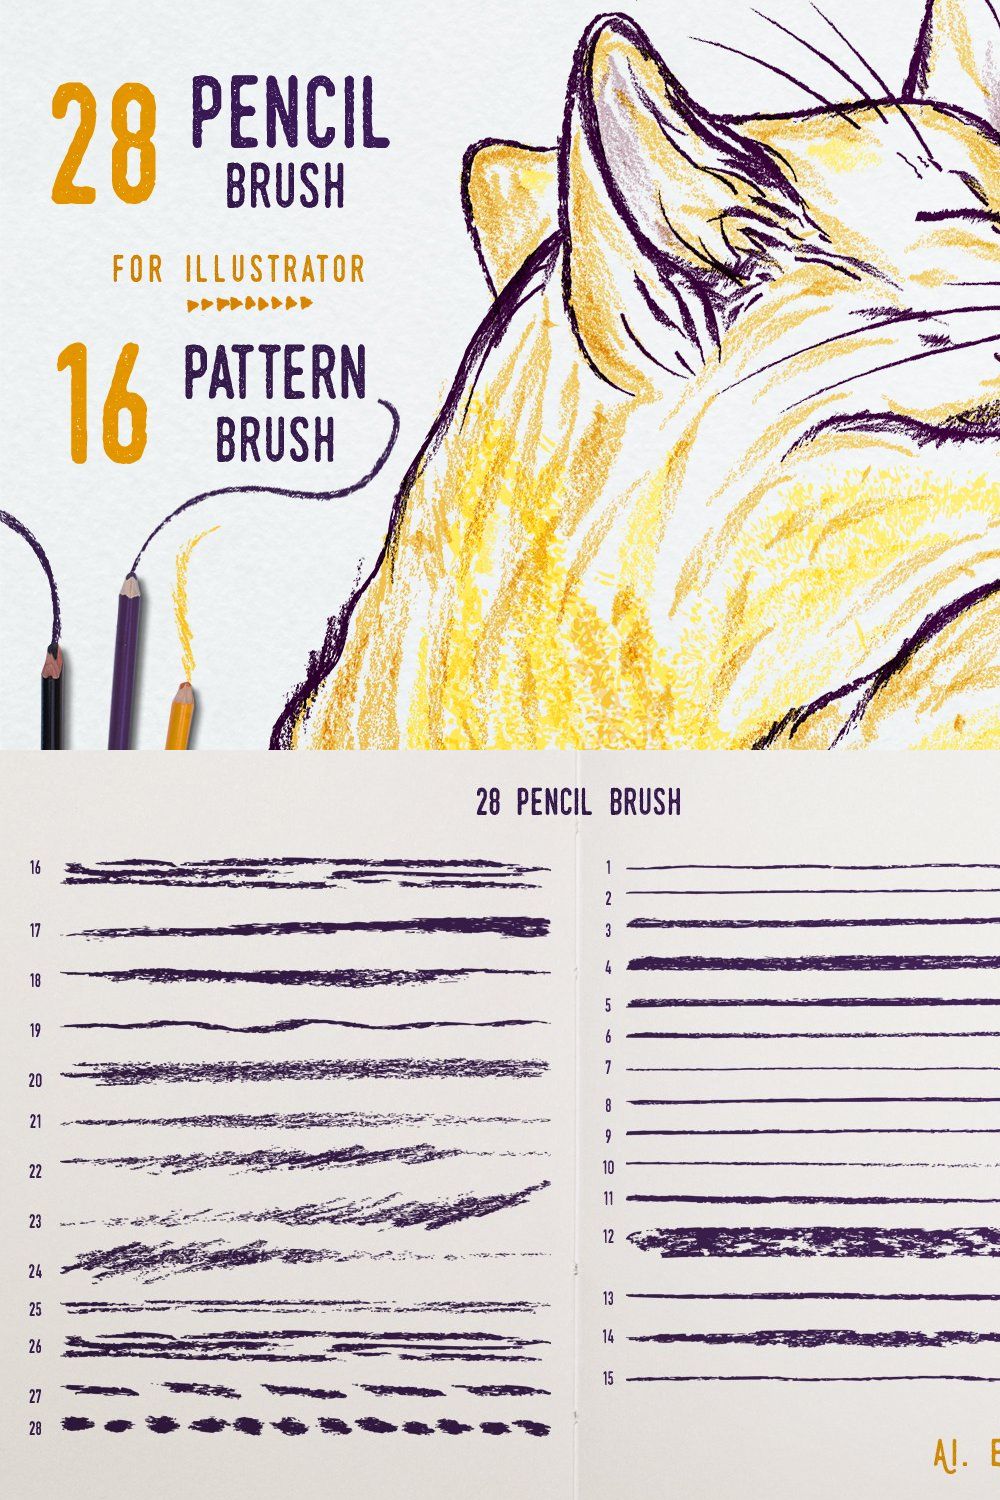 Illustrator Pencil Brushes pinterest preview image.